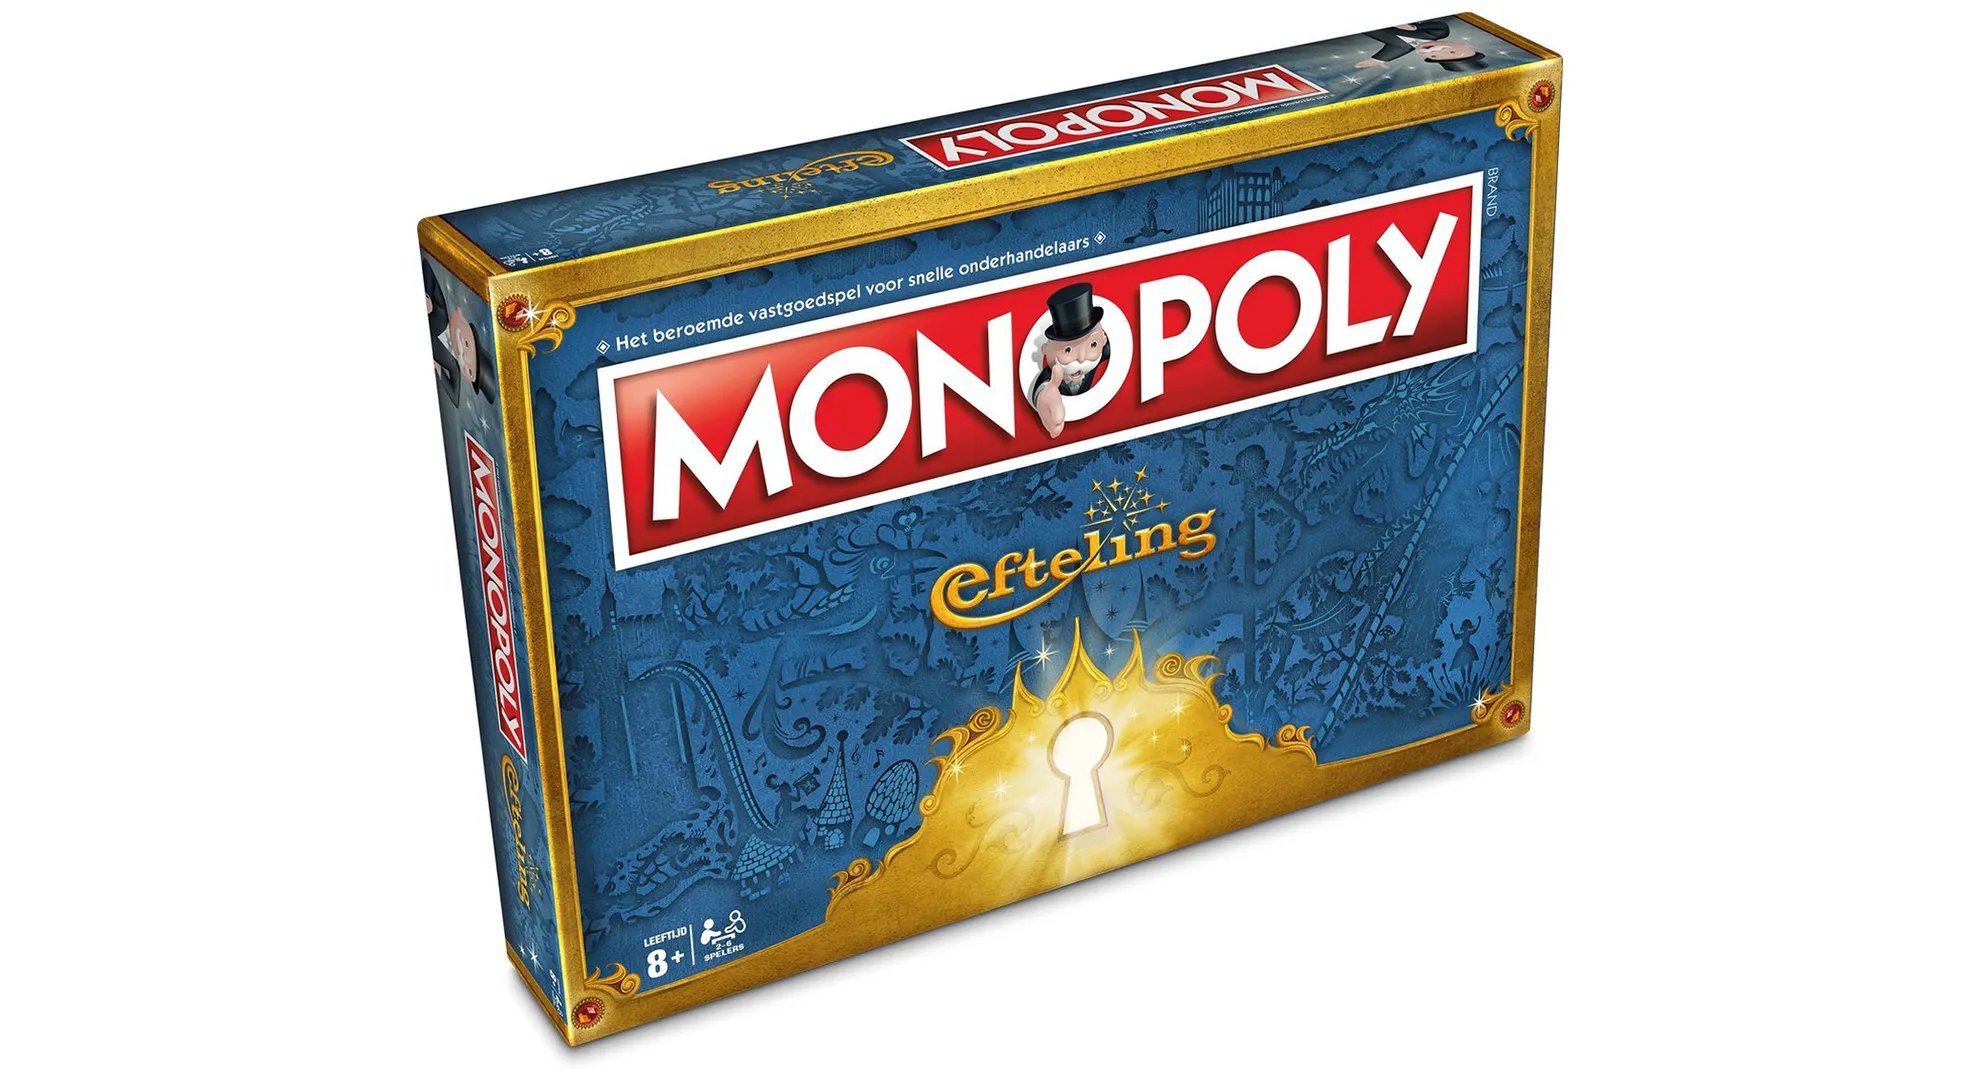 monopoly eftelingf1650975013